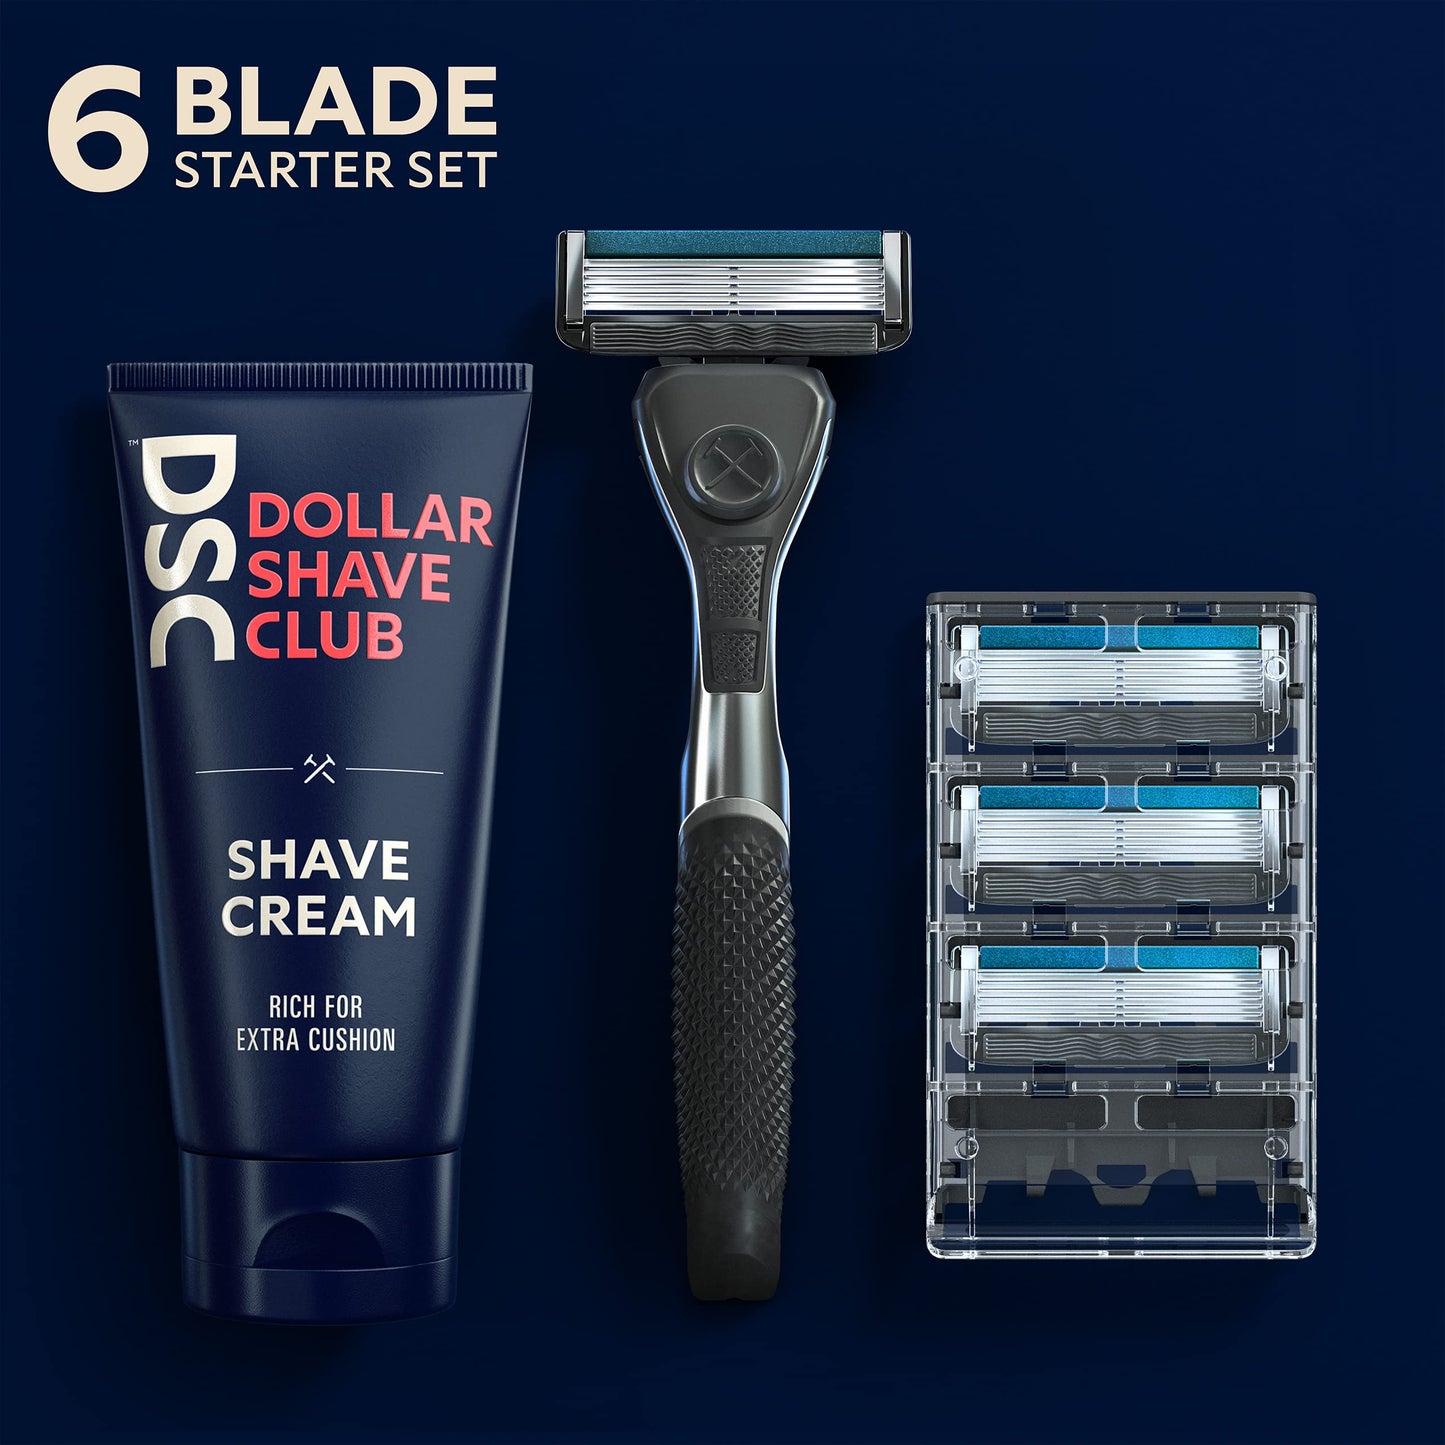 Dollar Shave Club | Diamond Grip Club Razor Handle, 6-Blade Club Razor Cartridges, Shave Cream with Aloe and Coconut Oil, Easy to Grip Handle, Shaving Kit, Value Bundle, 6 Piece Set